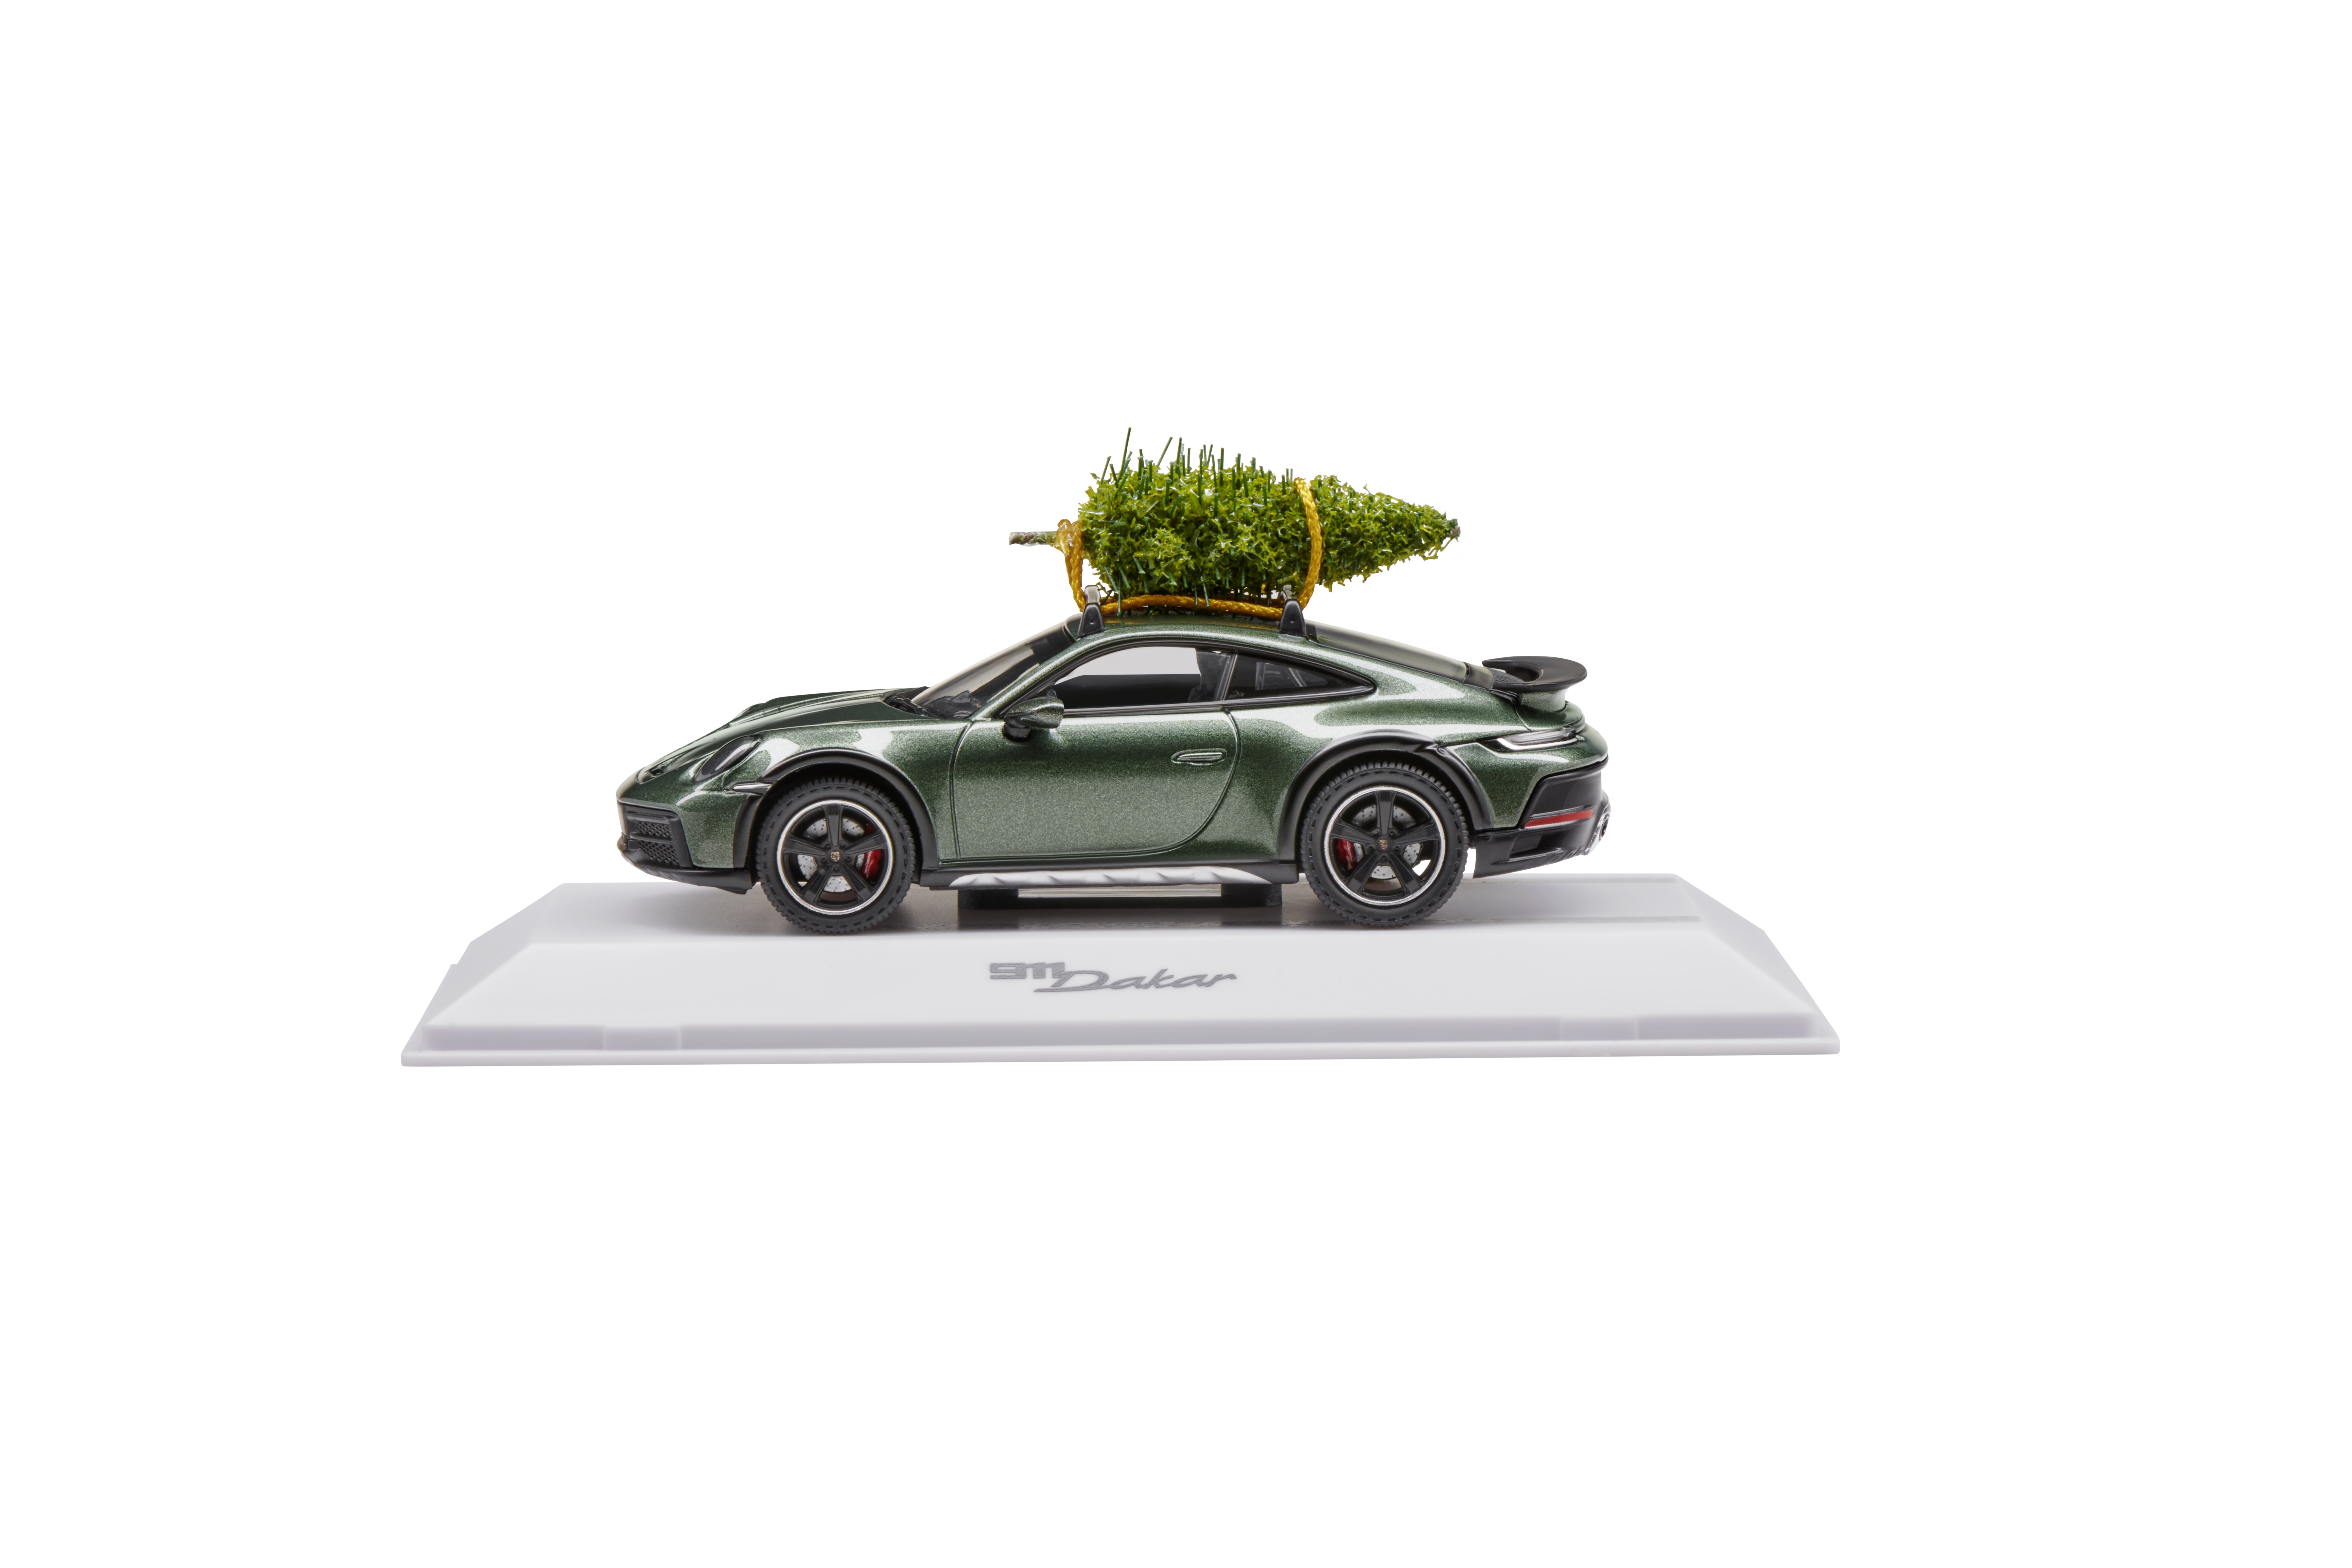 Miniature Porsche 911 Dakar with Christmas tree on the roof